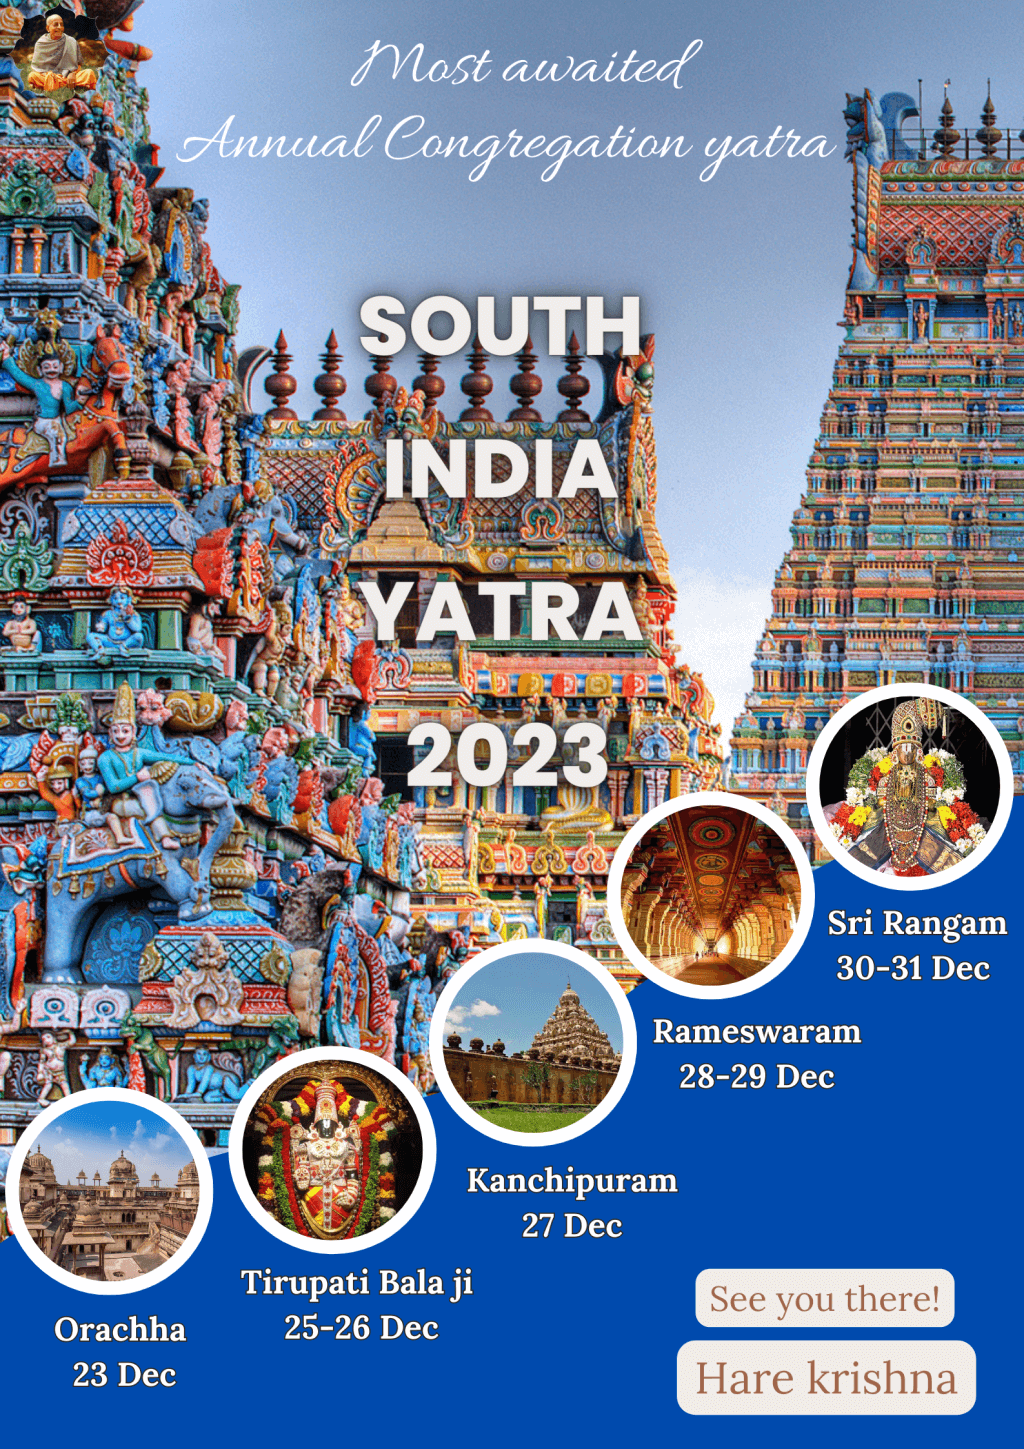 South India Yatra 2023